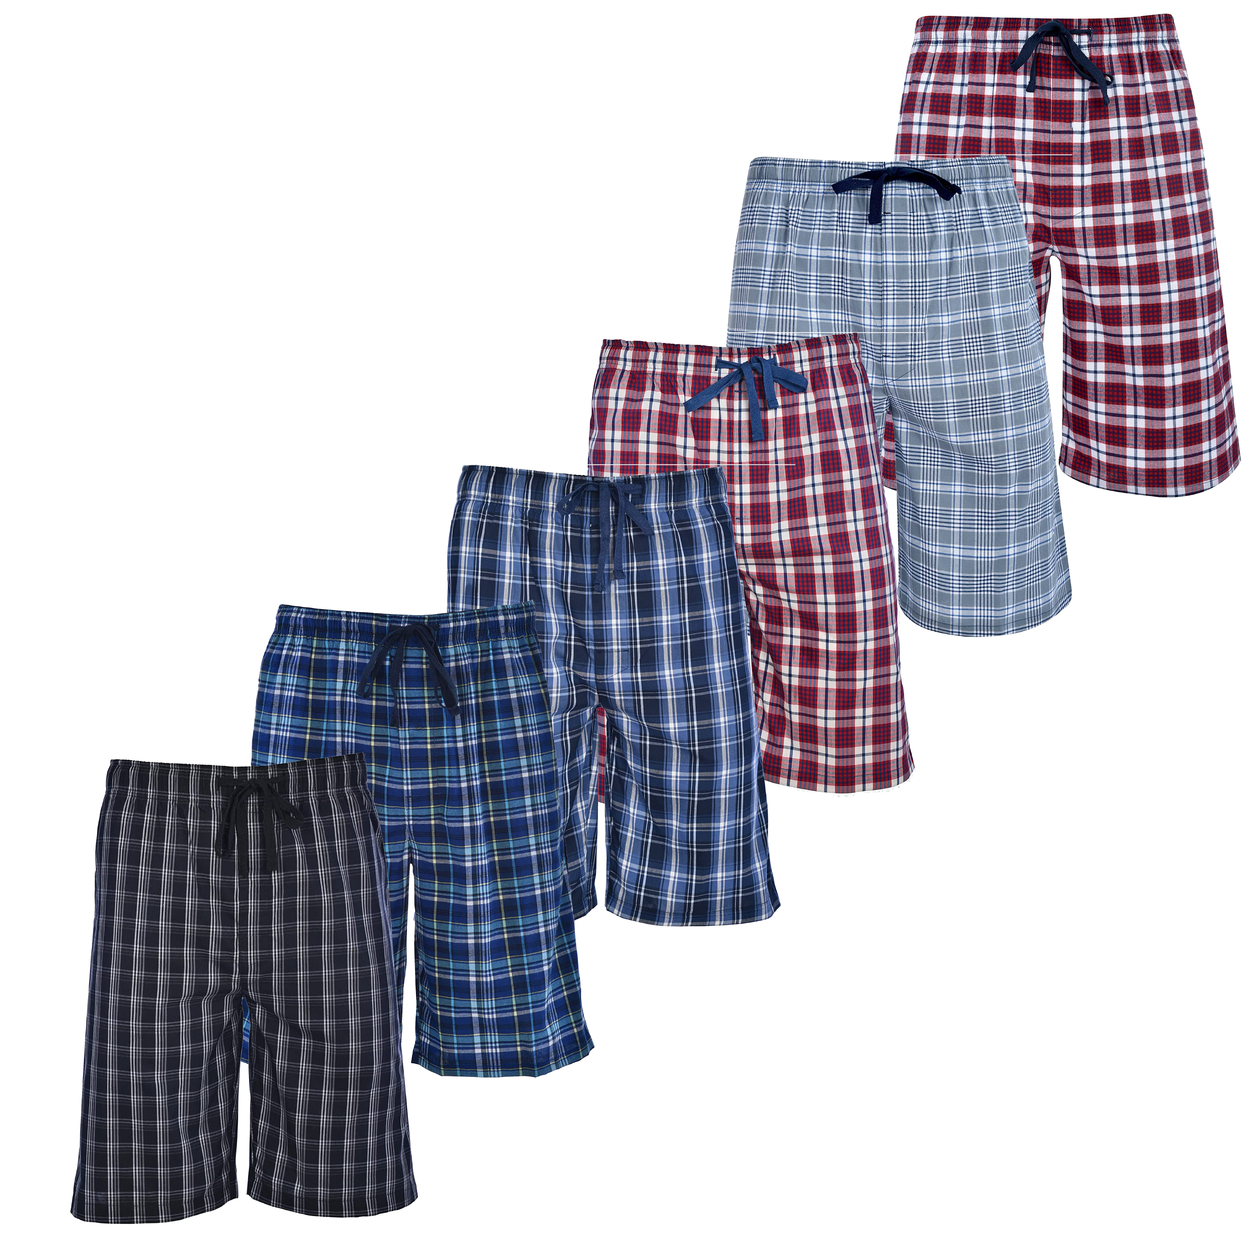 Multi-Pack: Men's Ultra Soft Plaid Lounge Pajama Sleep Wear Shorts - 3-pack, X-large